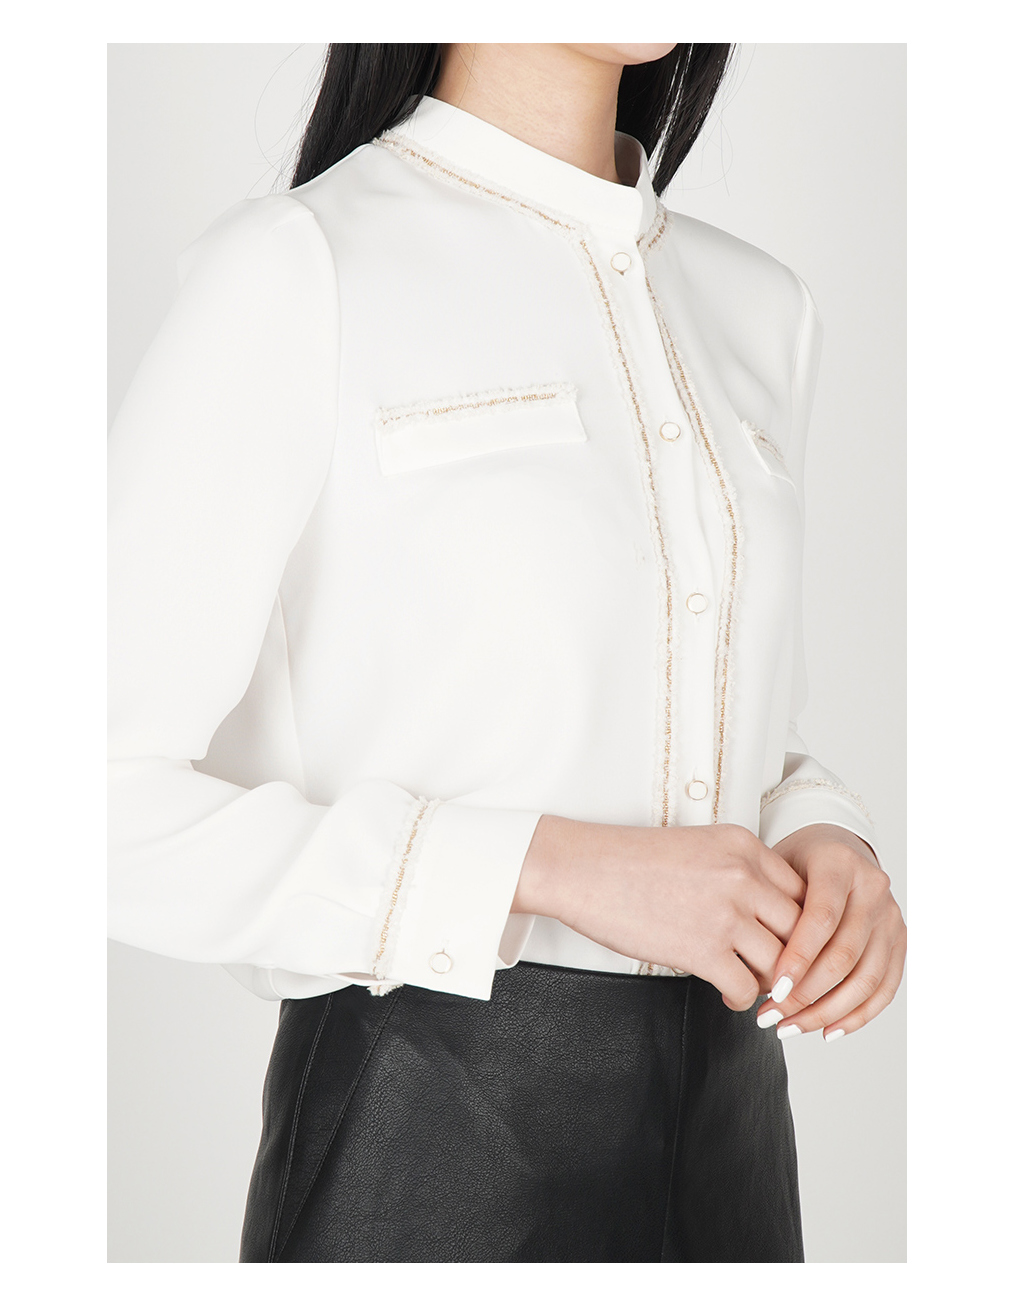 blouse model image-S2L9